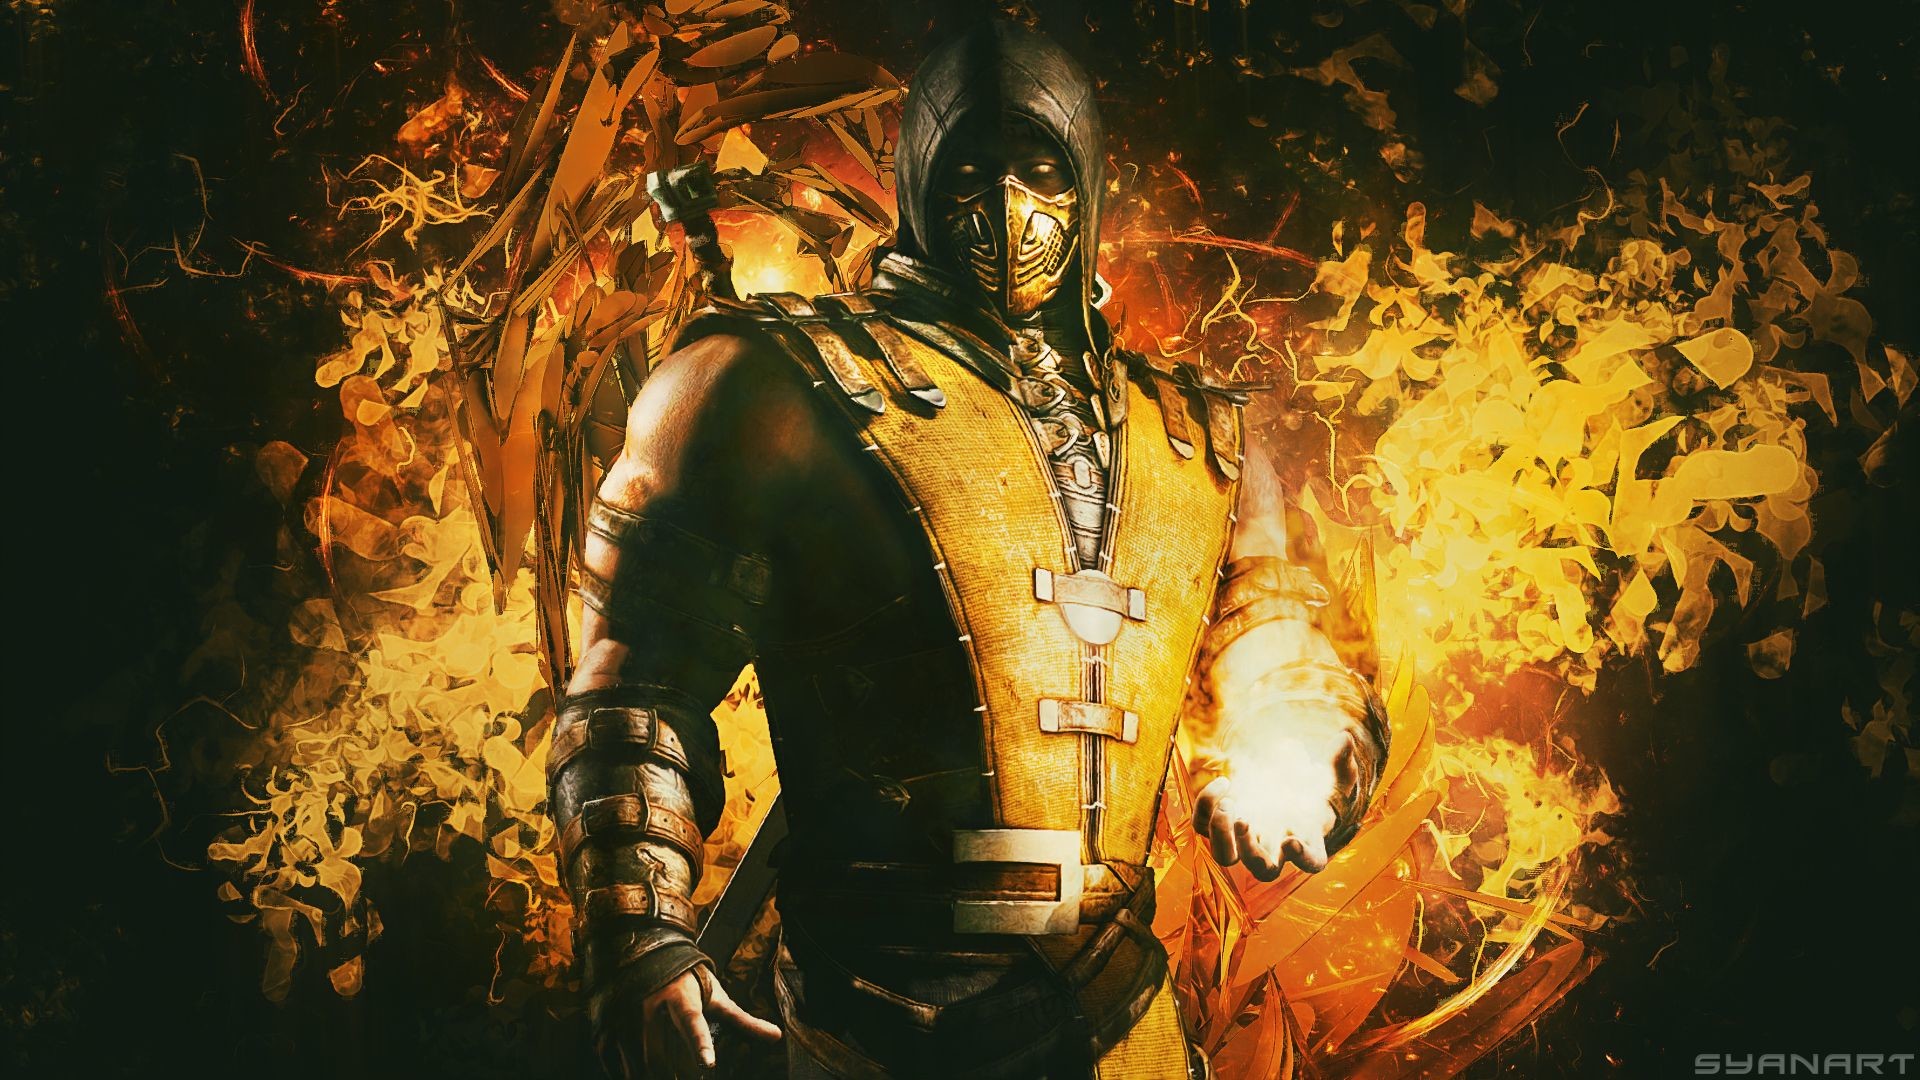 1920x1080 5120x2880 Scorpion Mortal Kombat X Wallpapers in jpg format for free  download">